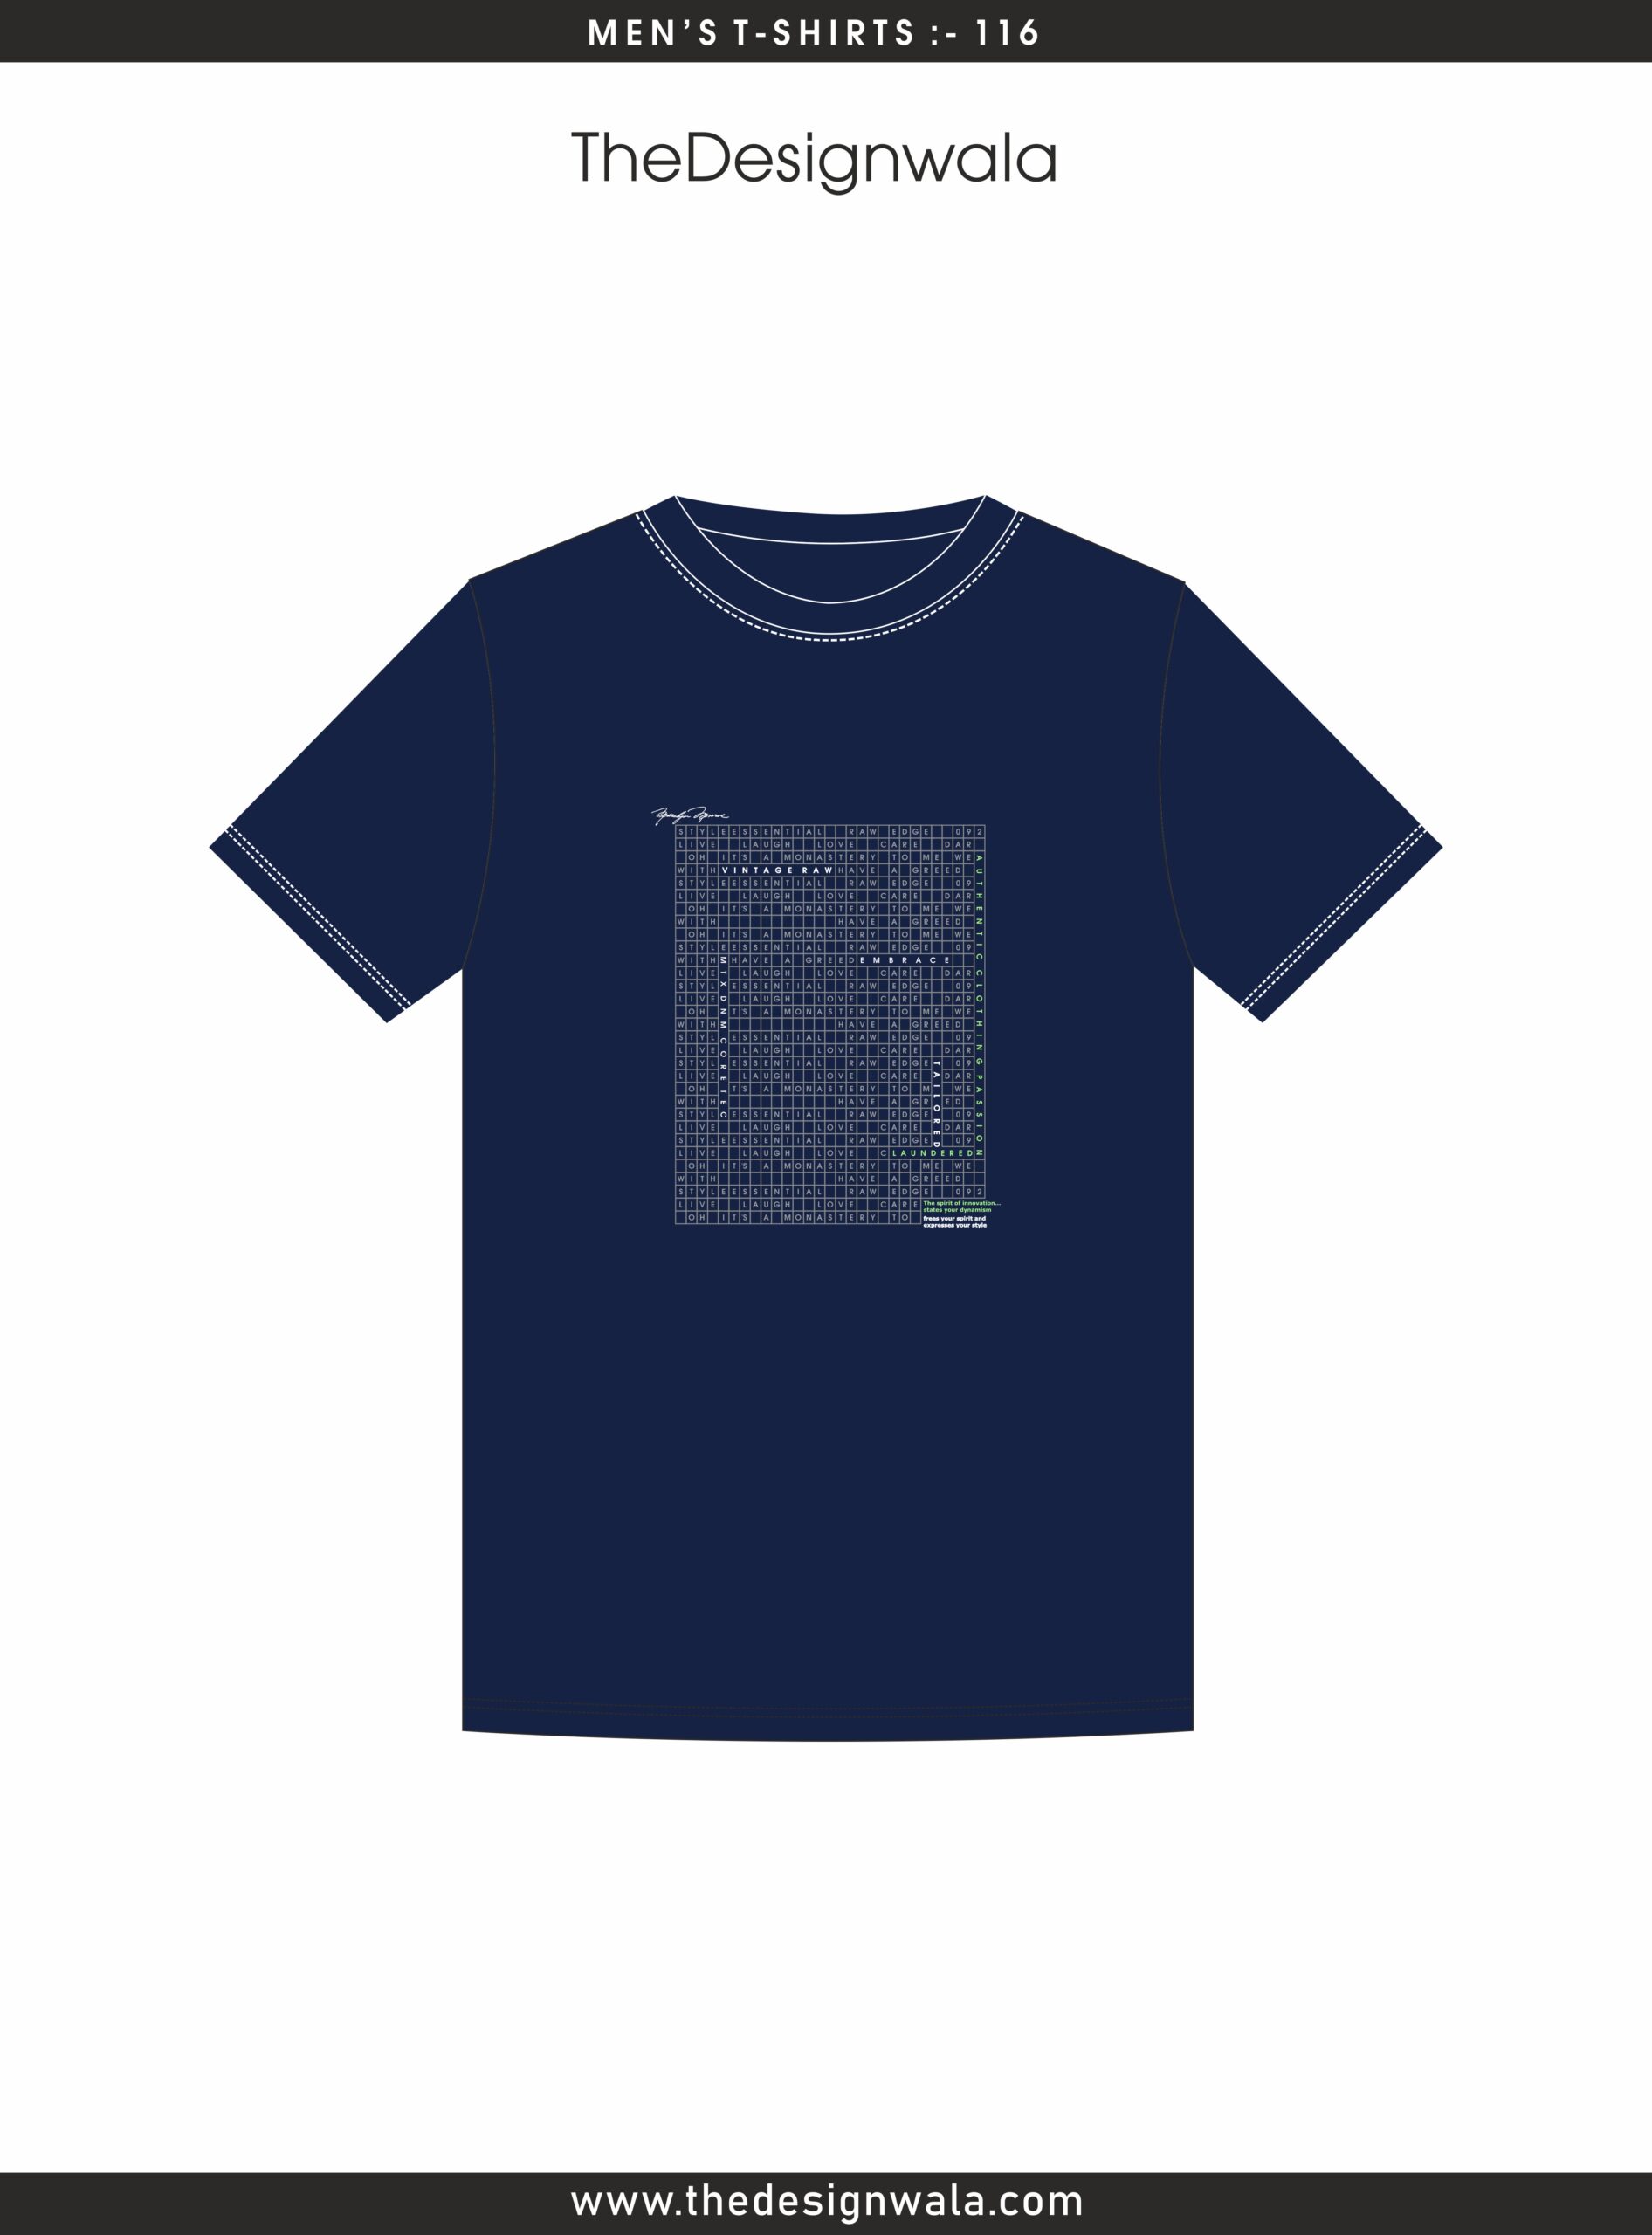 minimalist t-shirt designs for men's